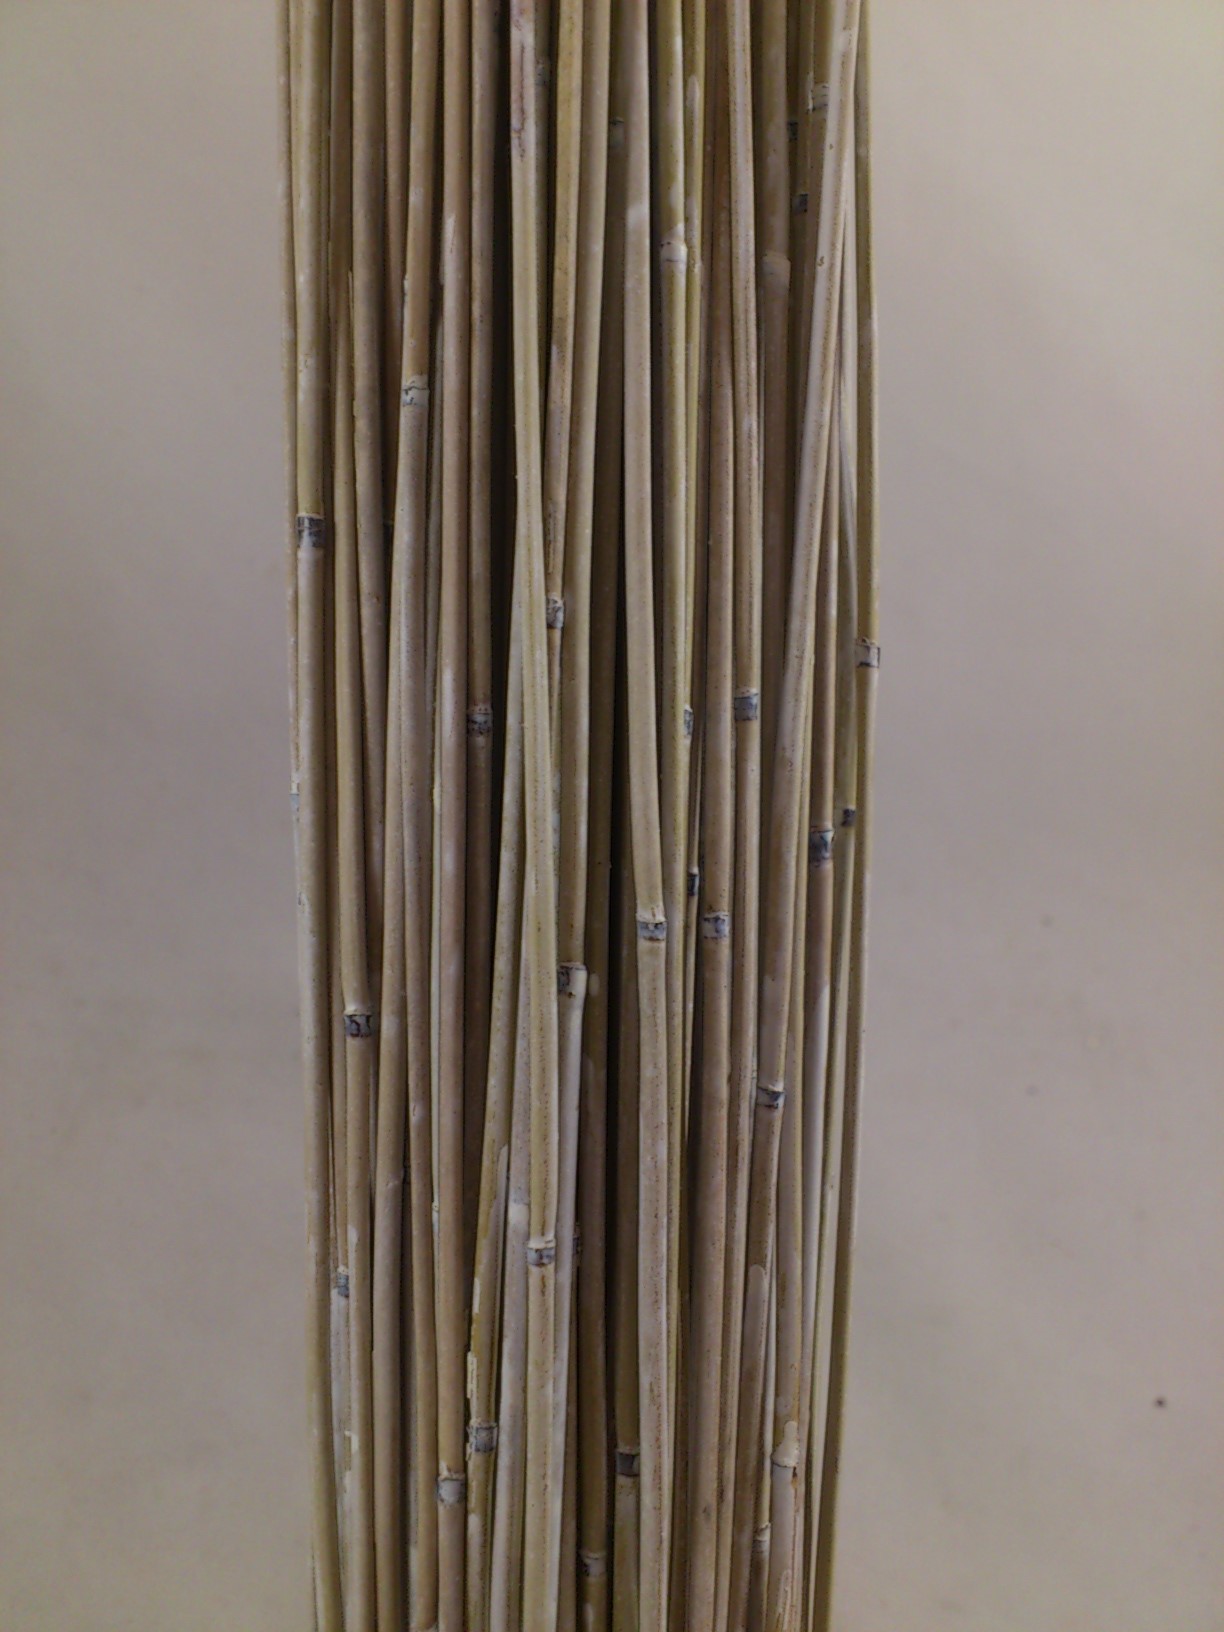 Vlei reed 400 gr. 80 cm white-wash